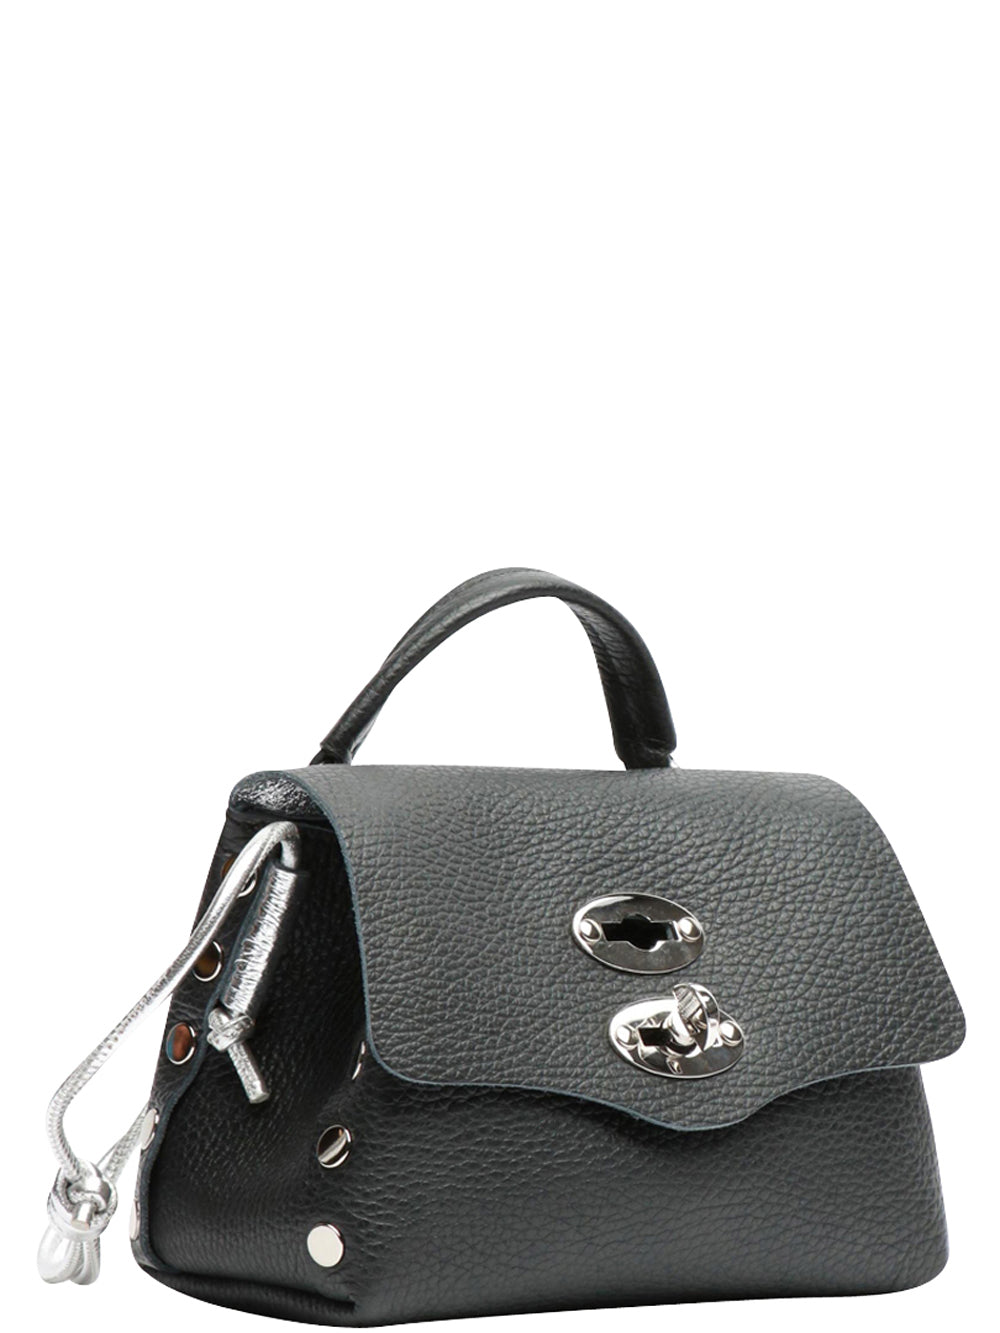 Postina Daily Candy SBaby Handbag in Black Leather